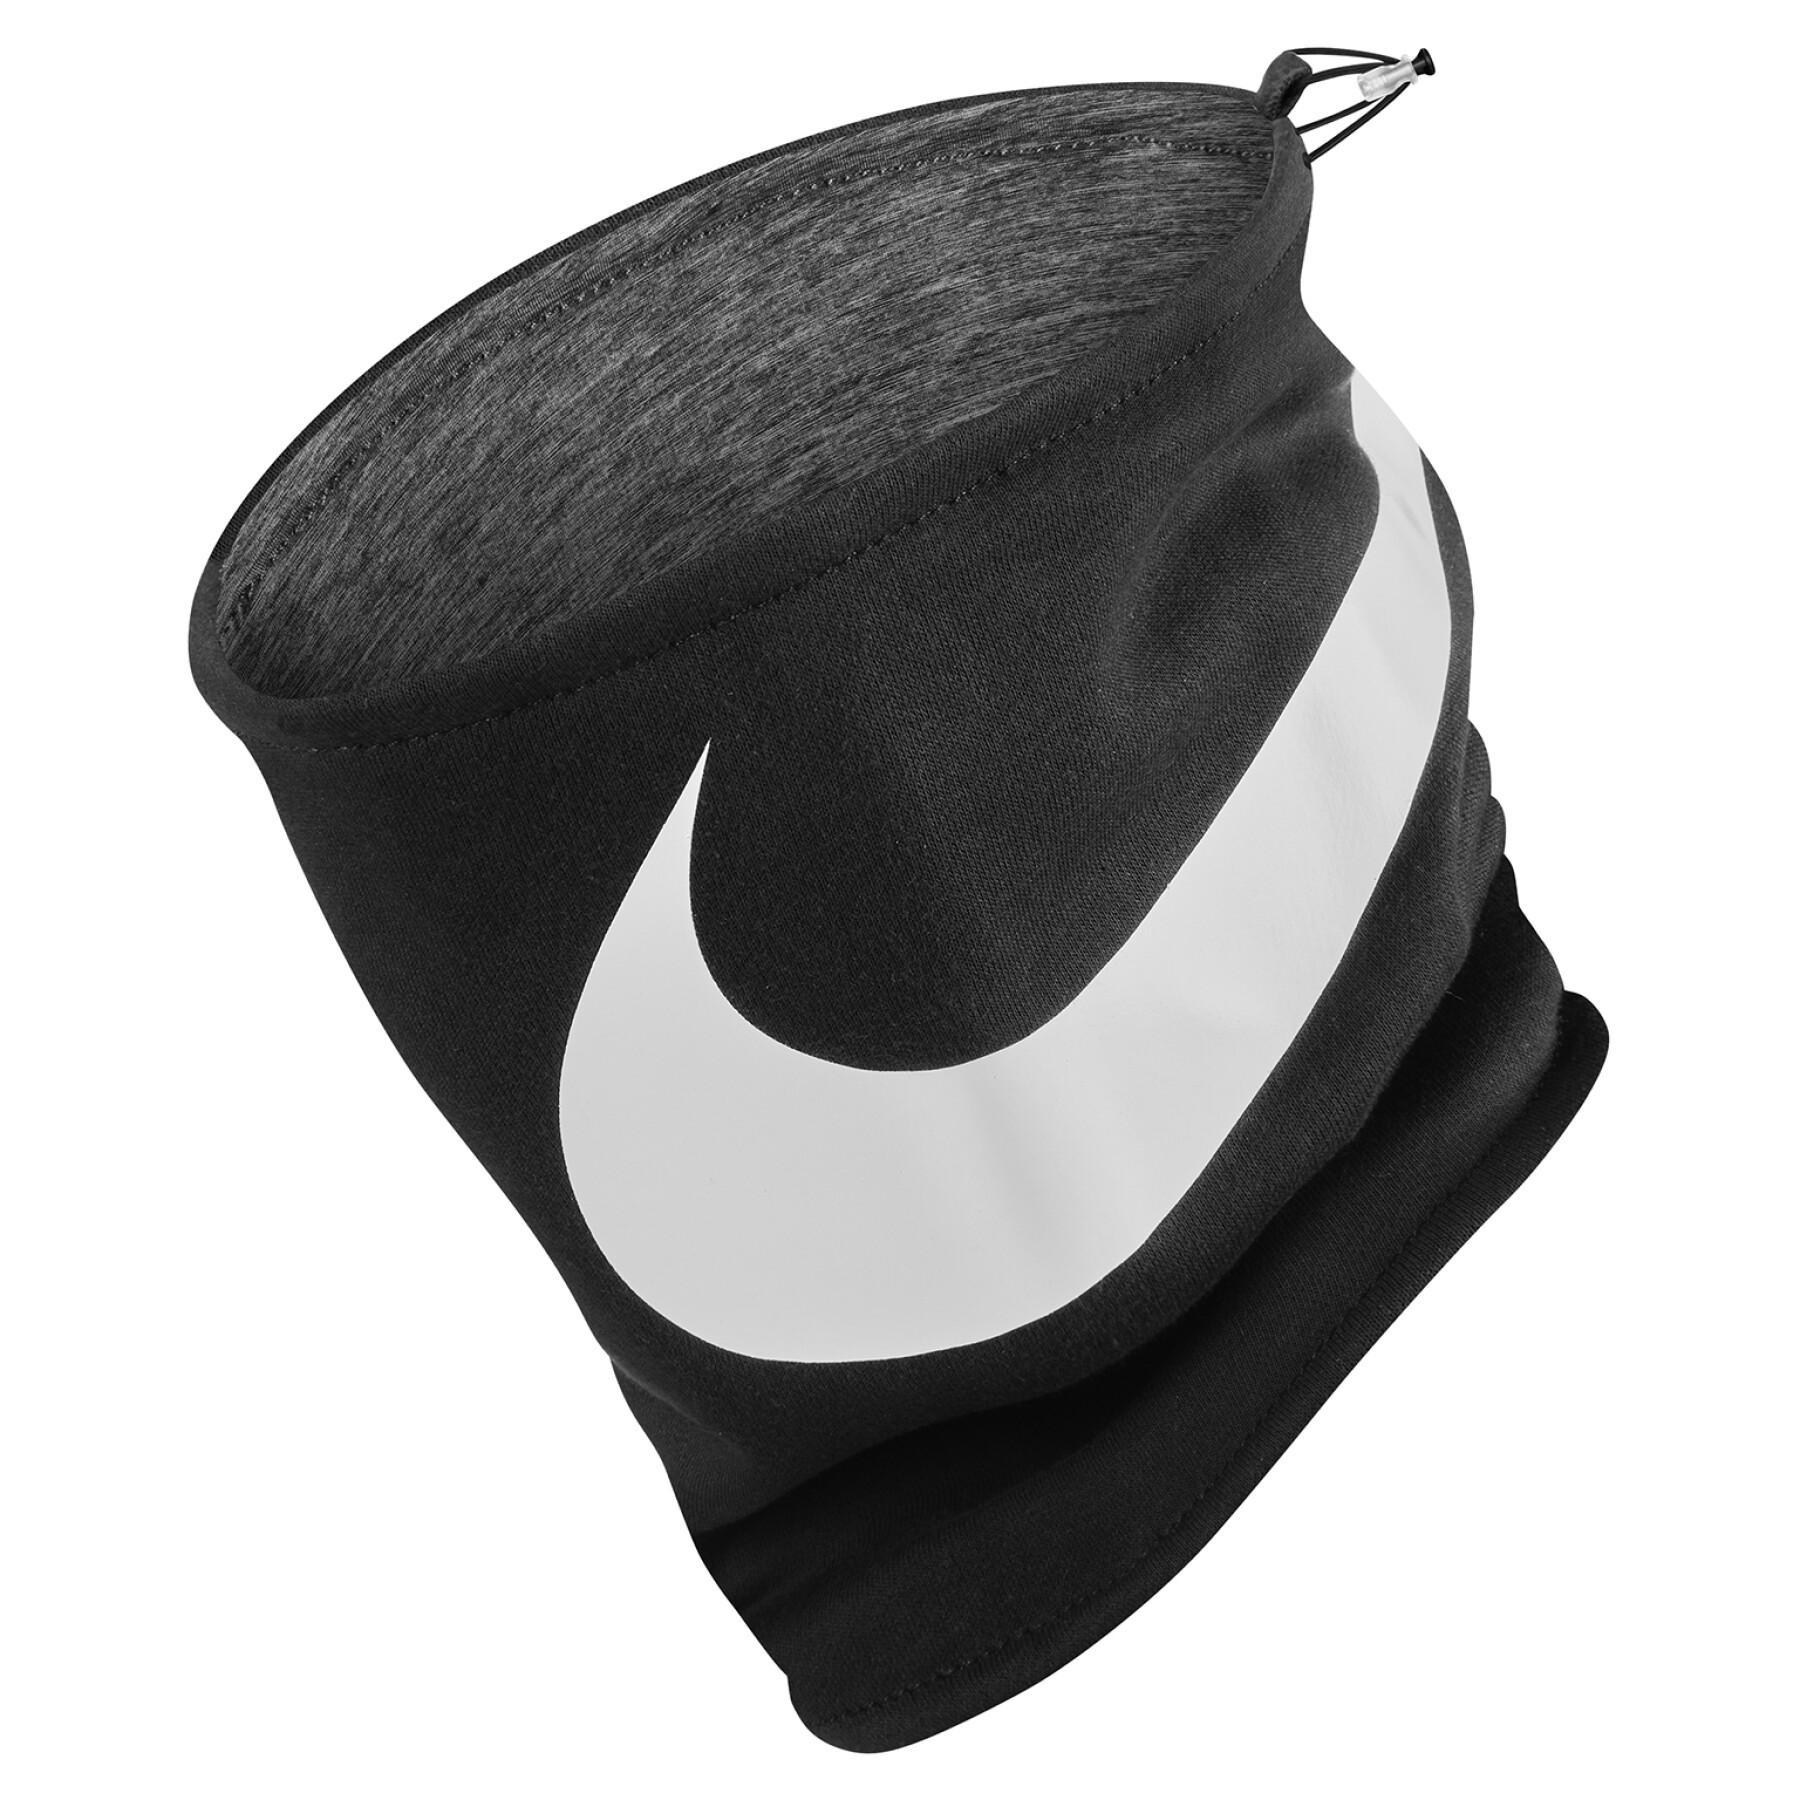 Reversible choker Nike 2.0 trademark